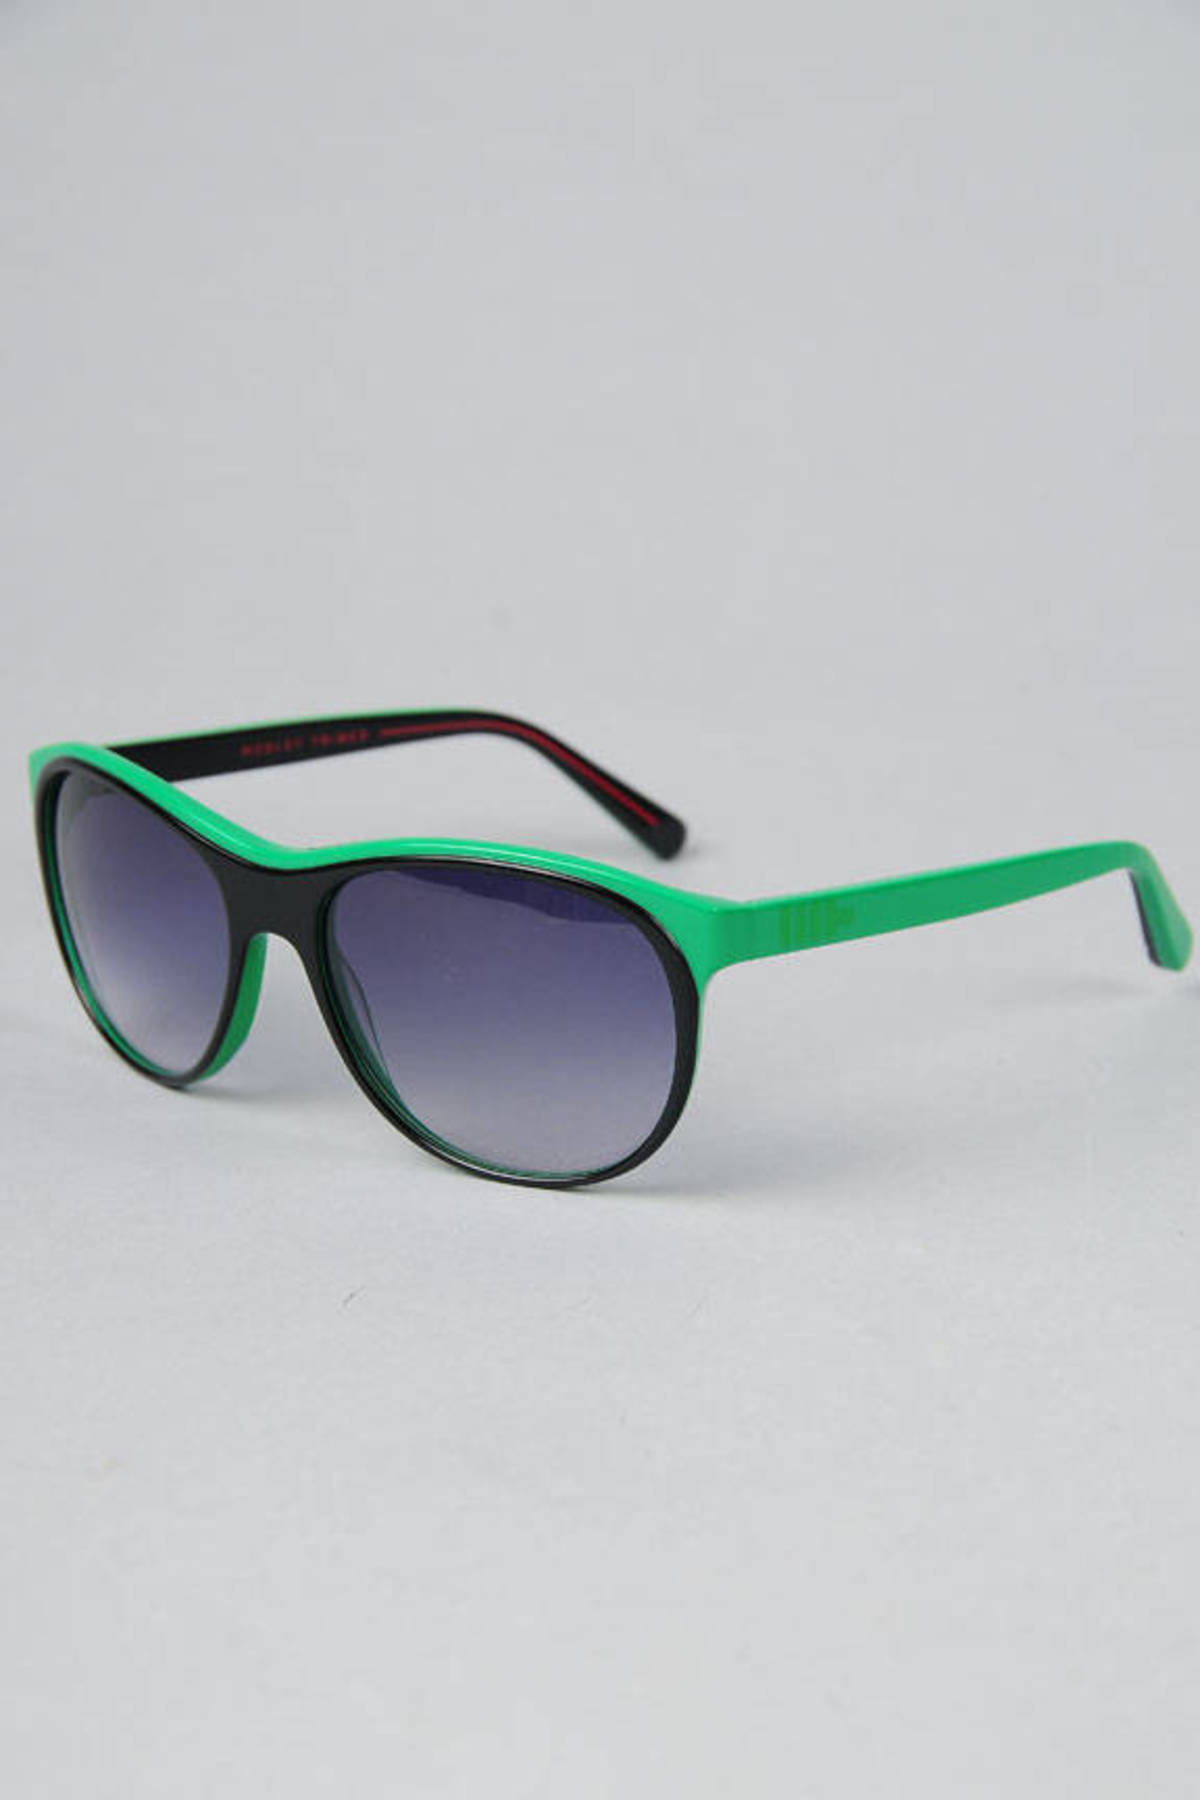 Patterson Sunglasses in Black/Green - $45 | Tobi US